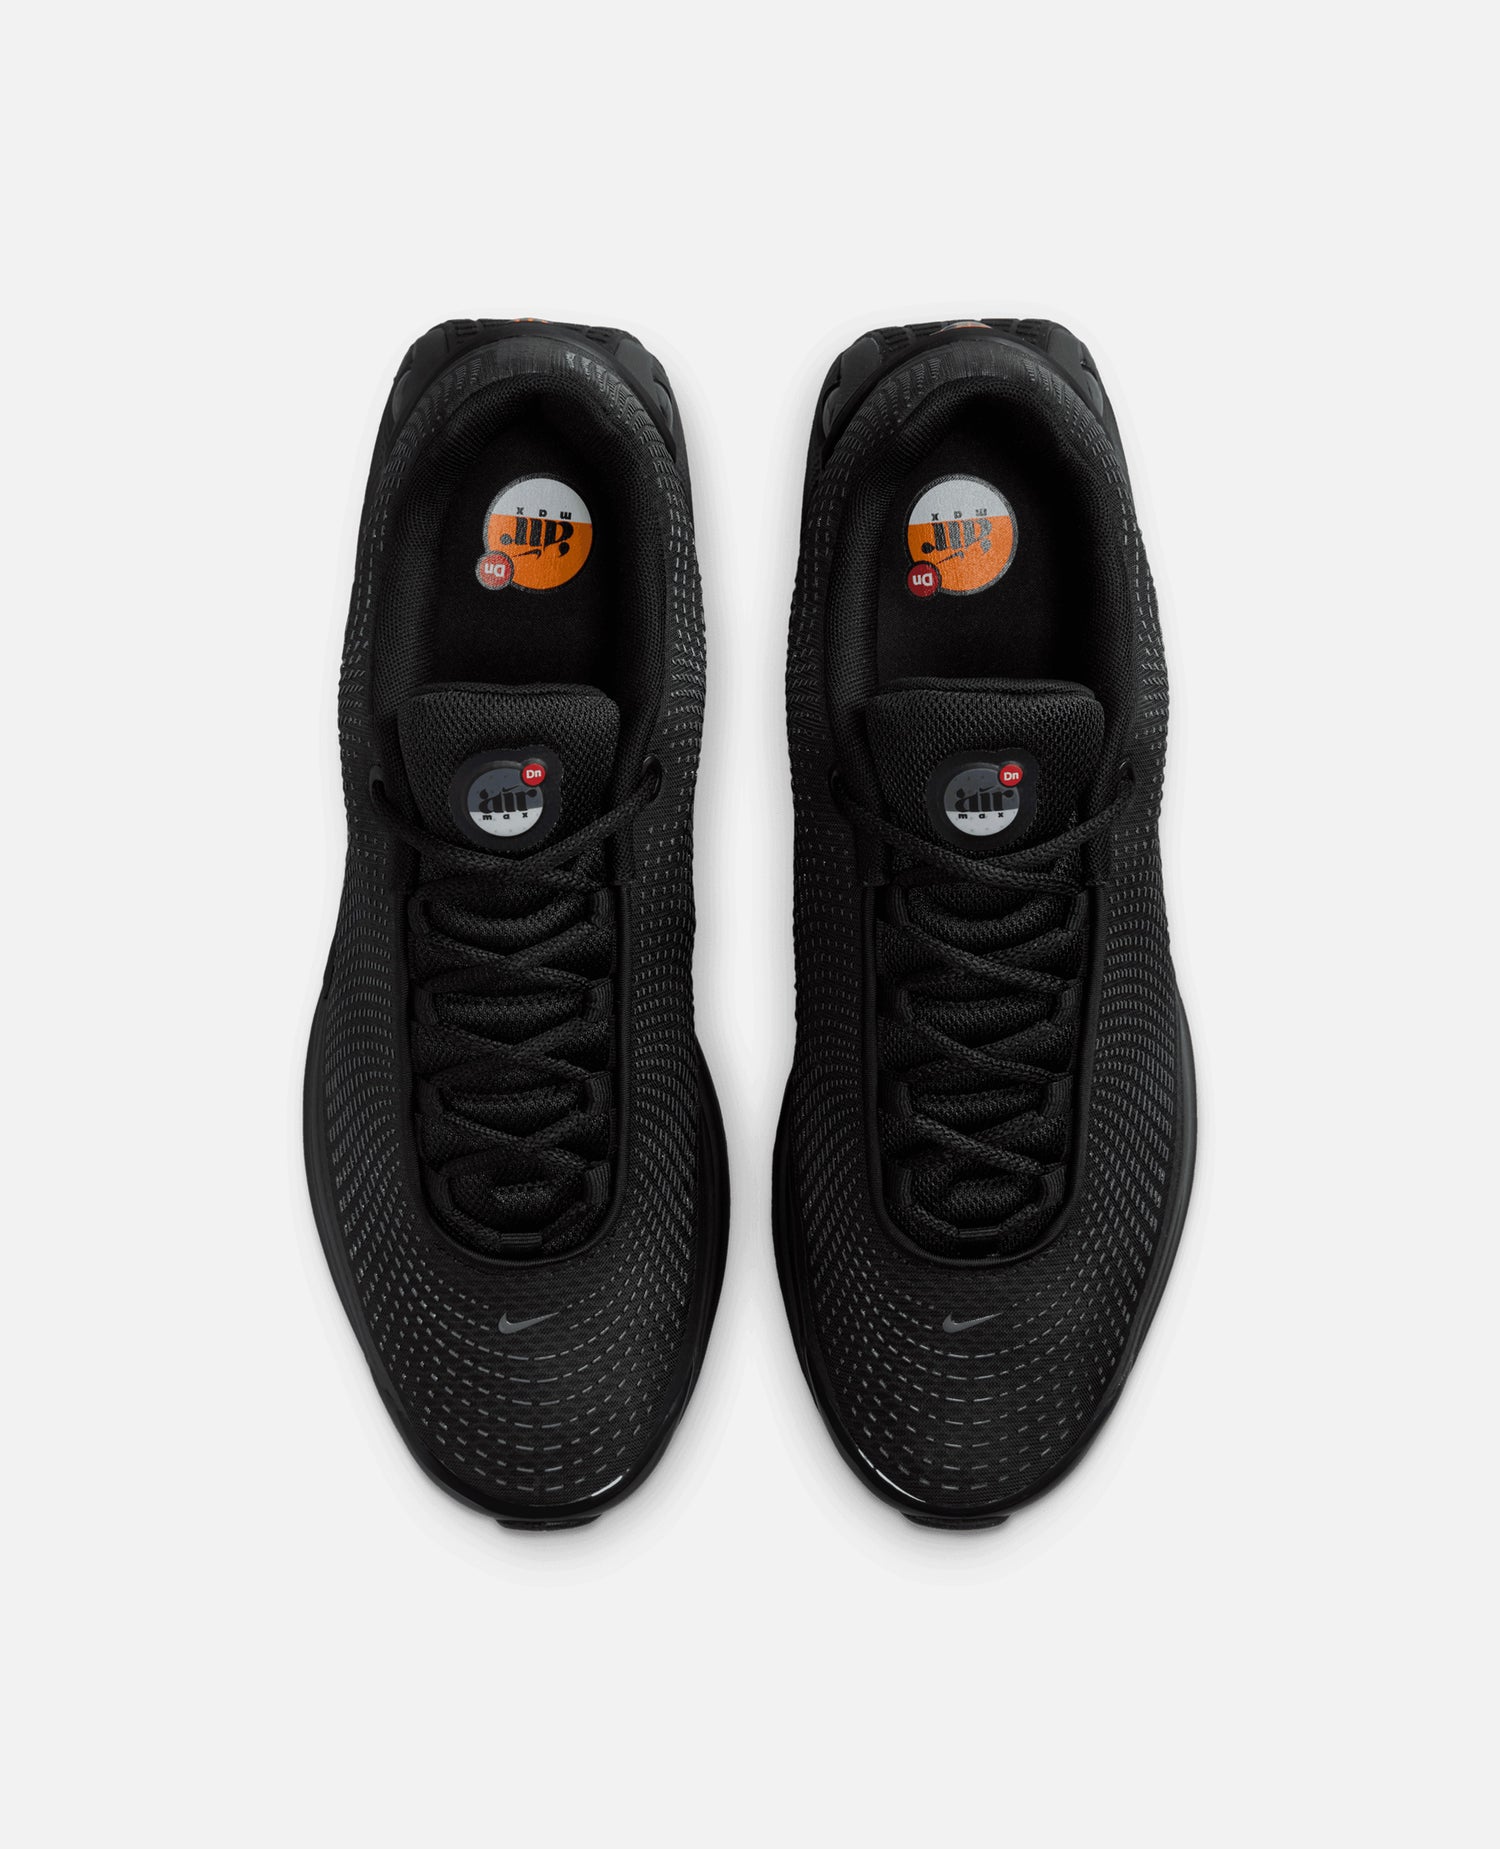 Nike Air Max Dn (Black/DK Smoke Grey-Dark Grey-Anthracite)